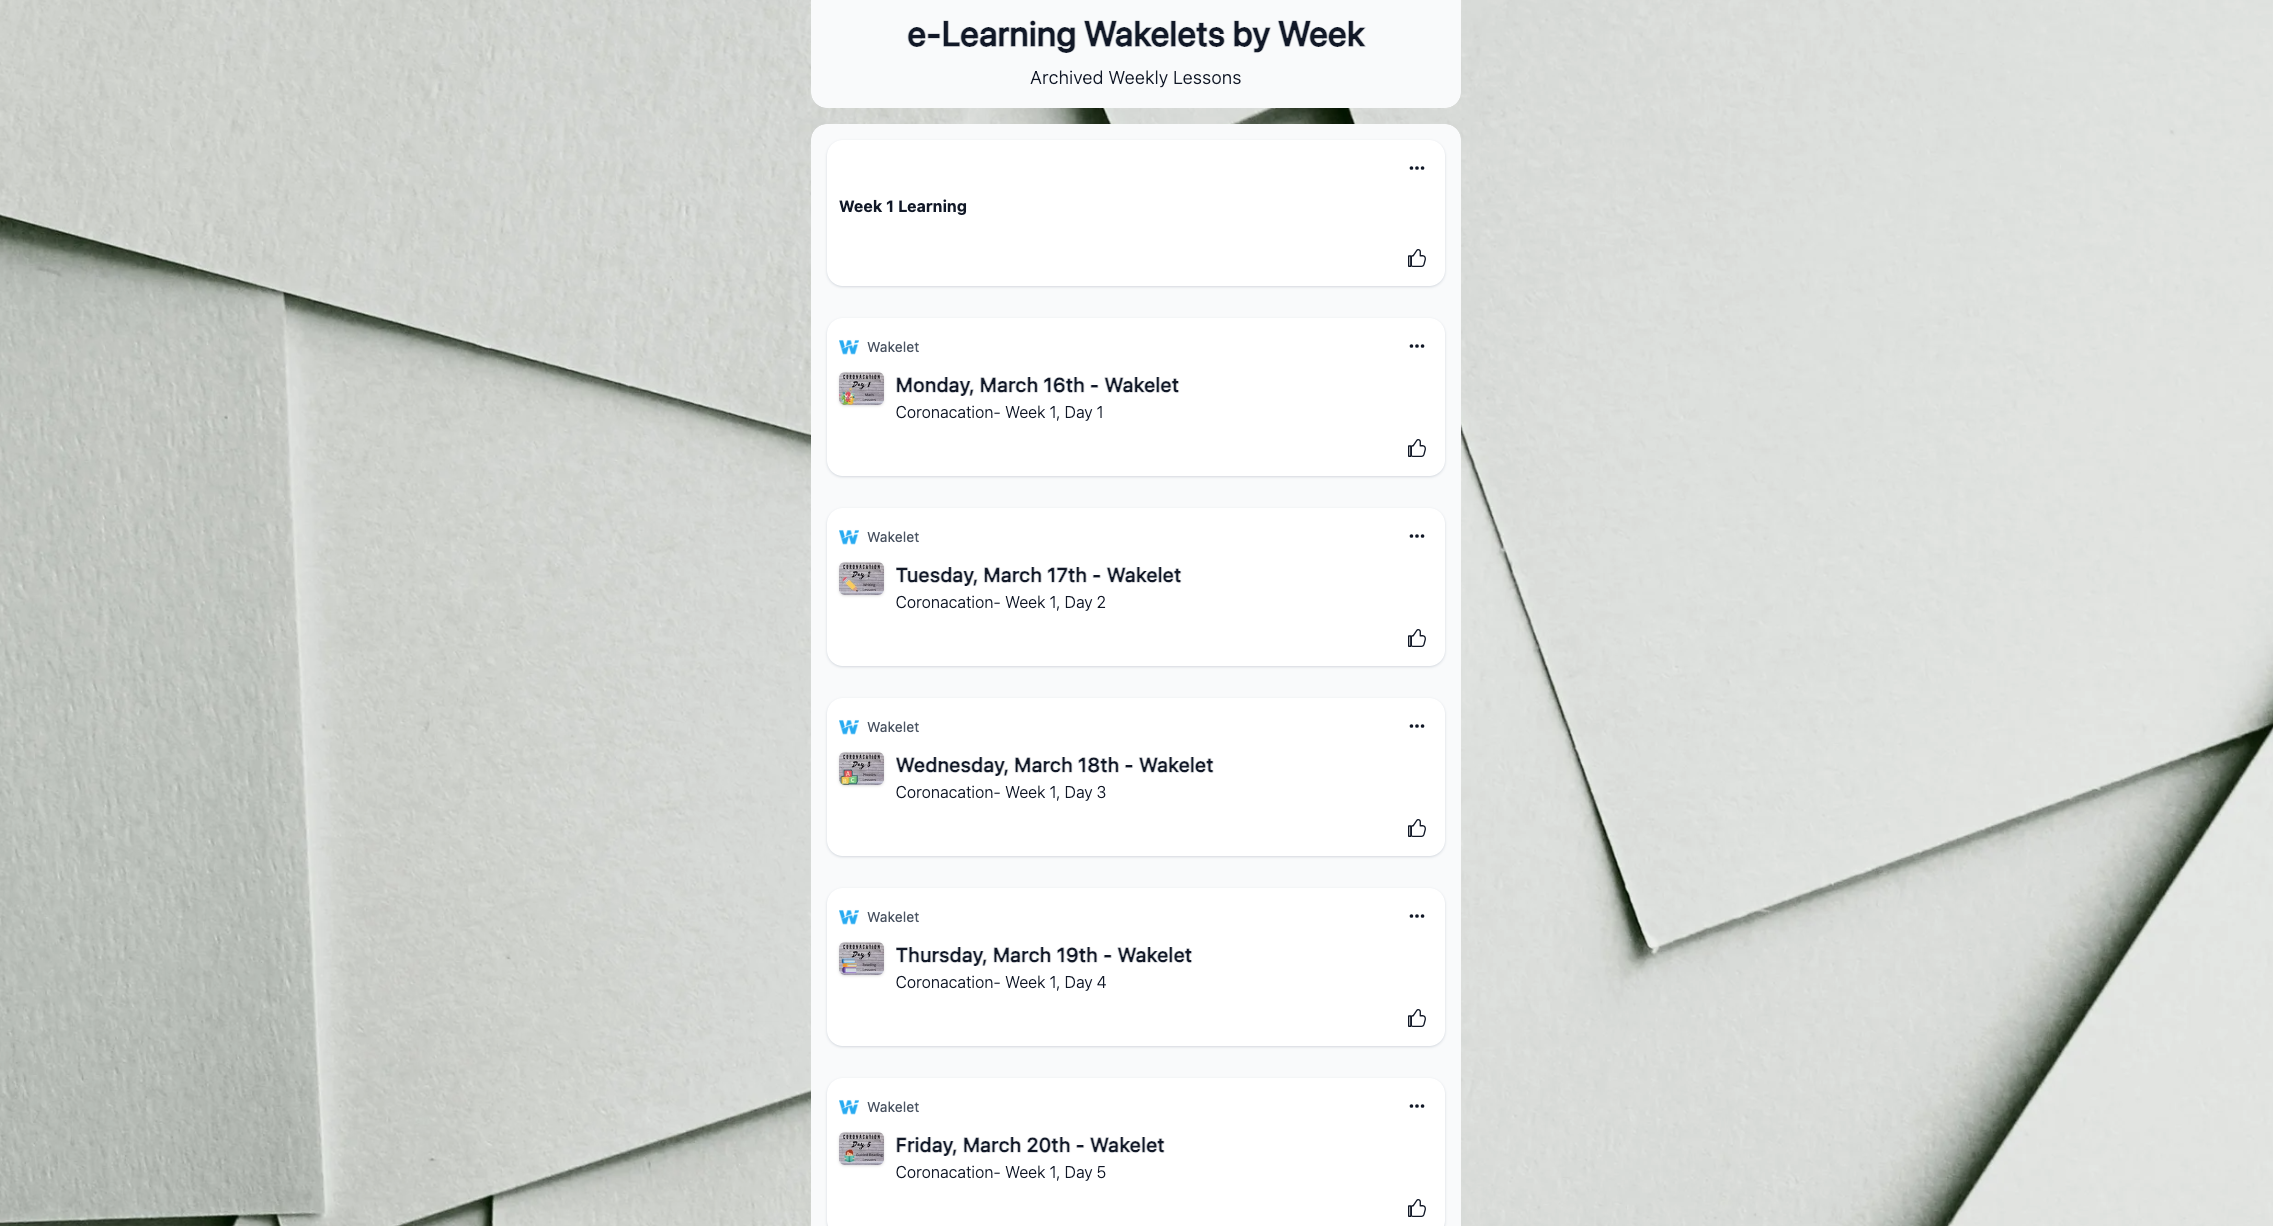 E-Learning Wakelets by Week